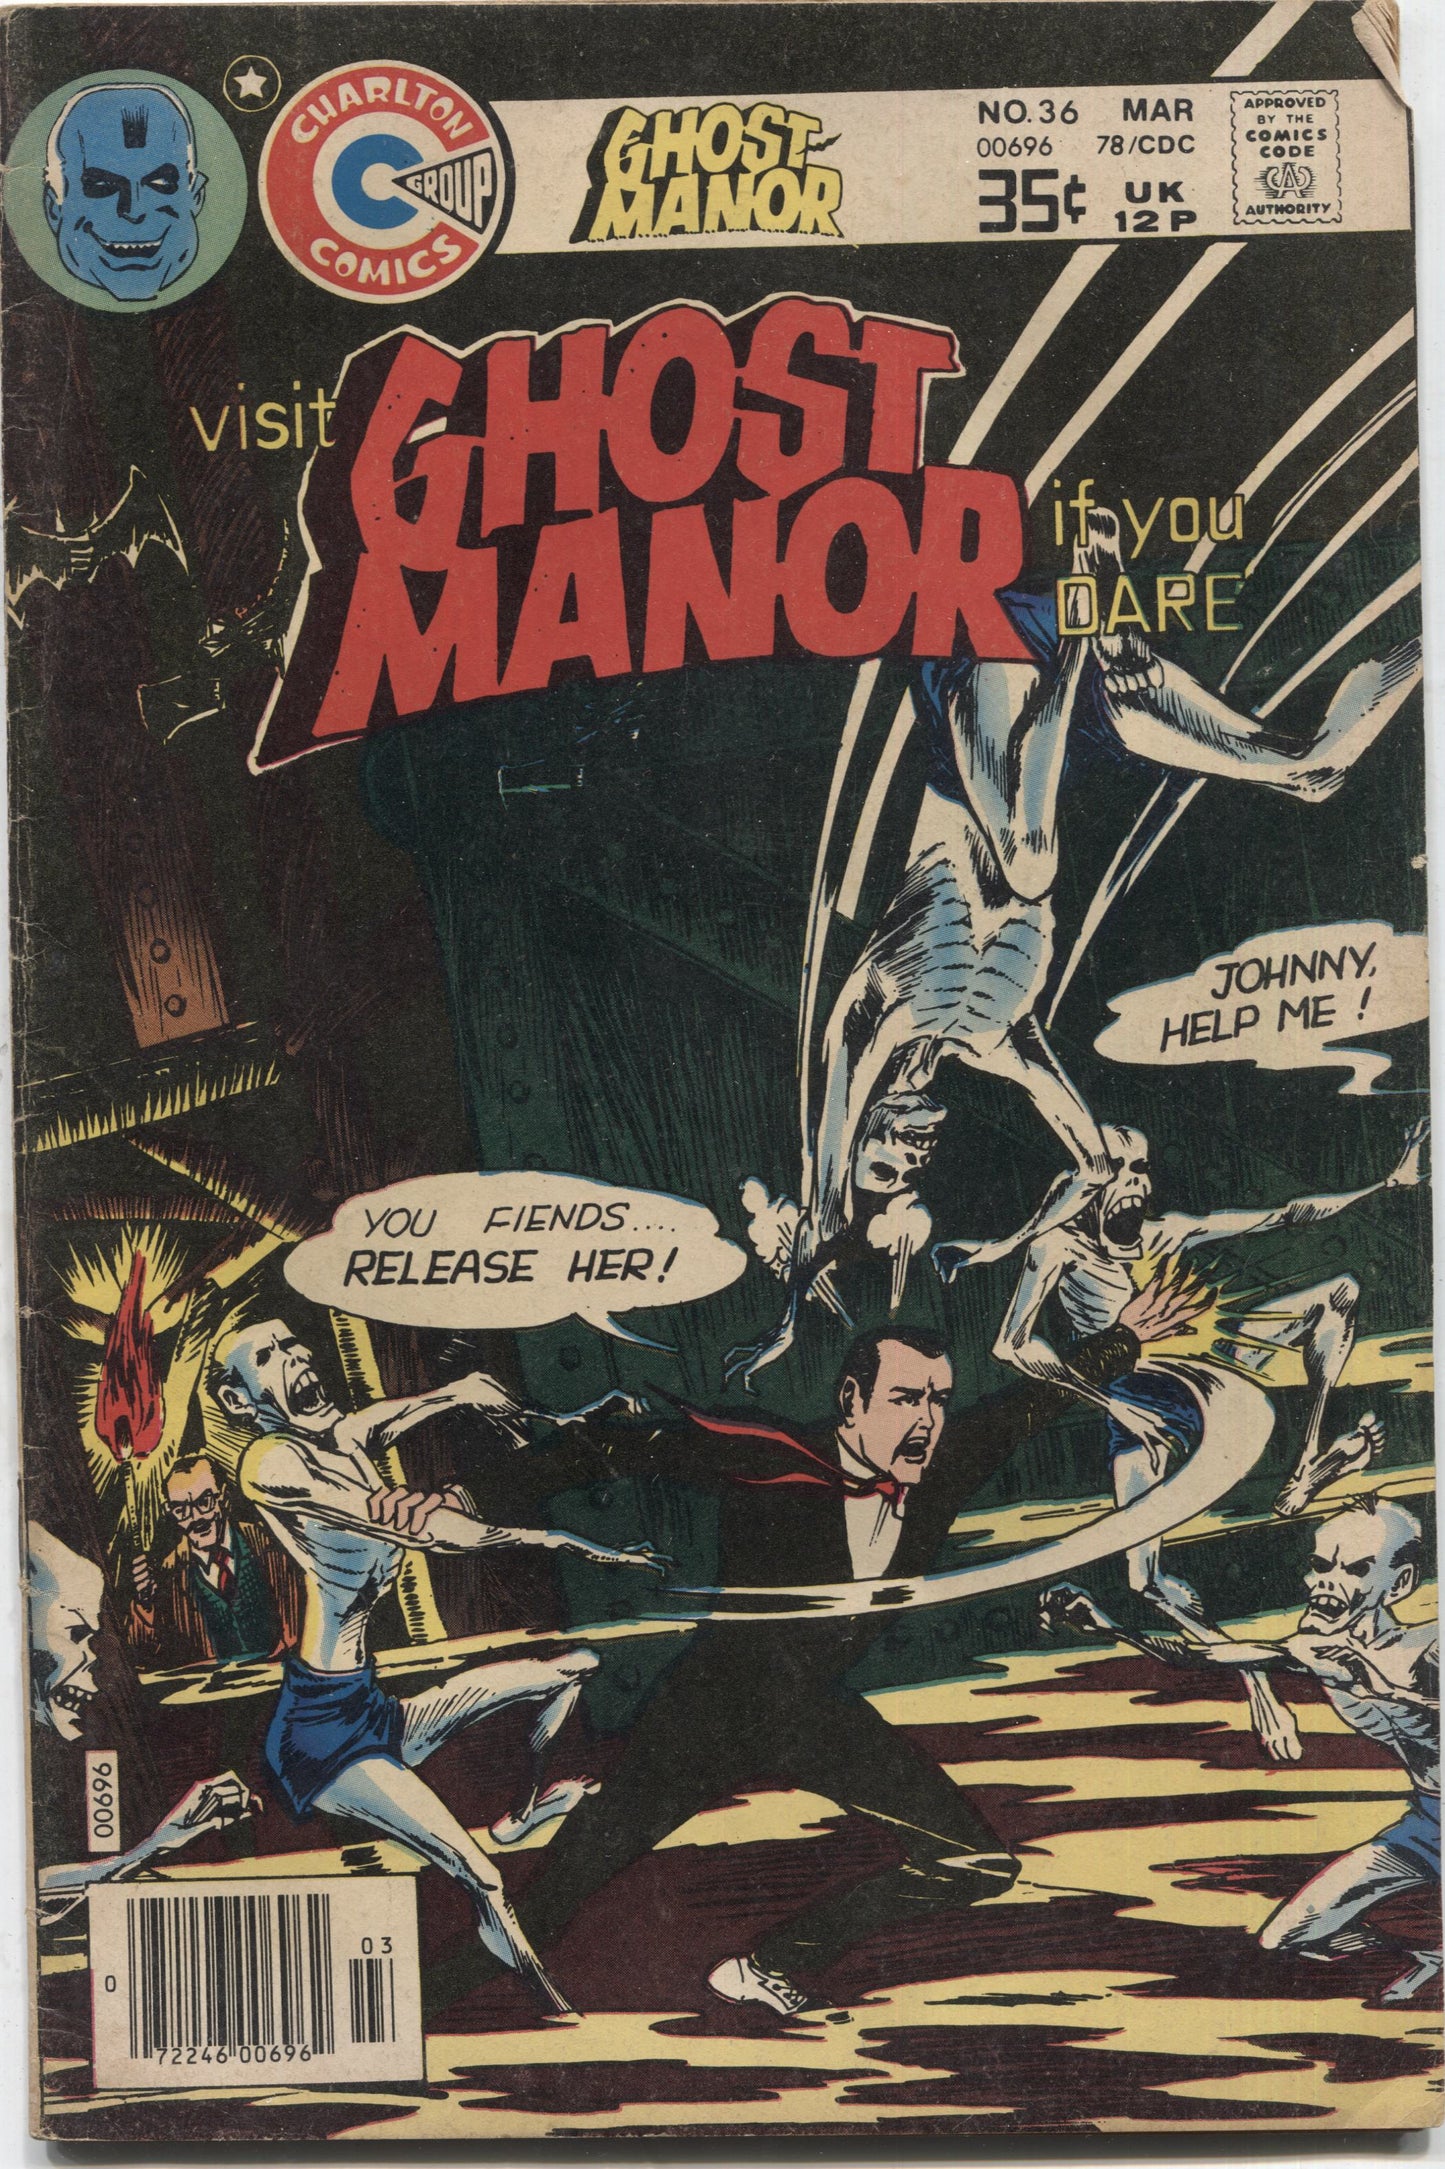 Ghost Manor No. 36, Charlton Comics, March 1978